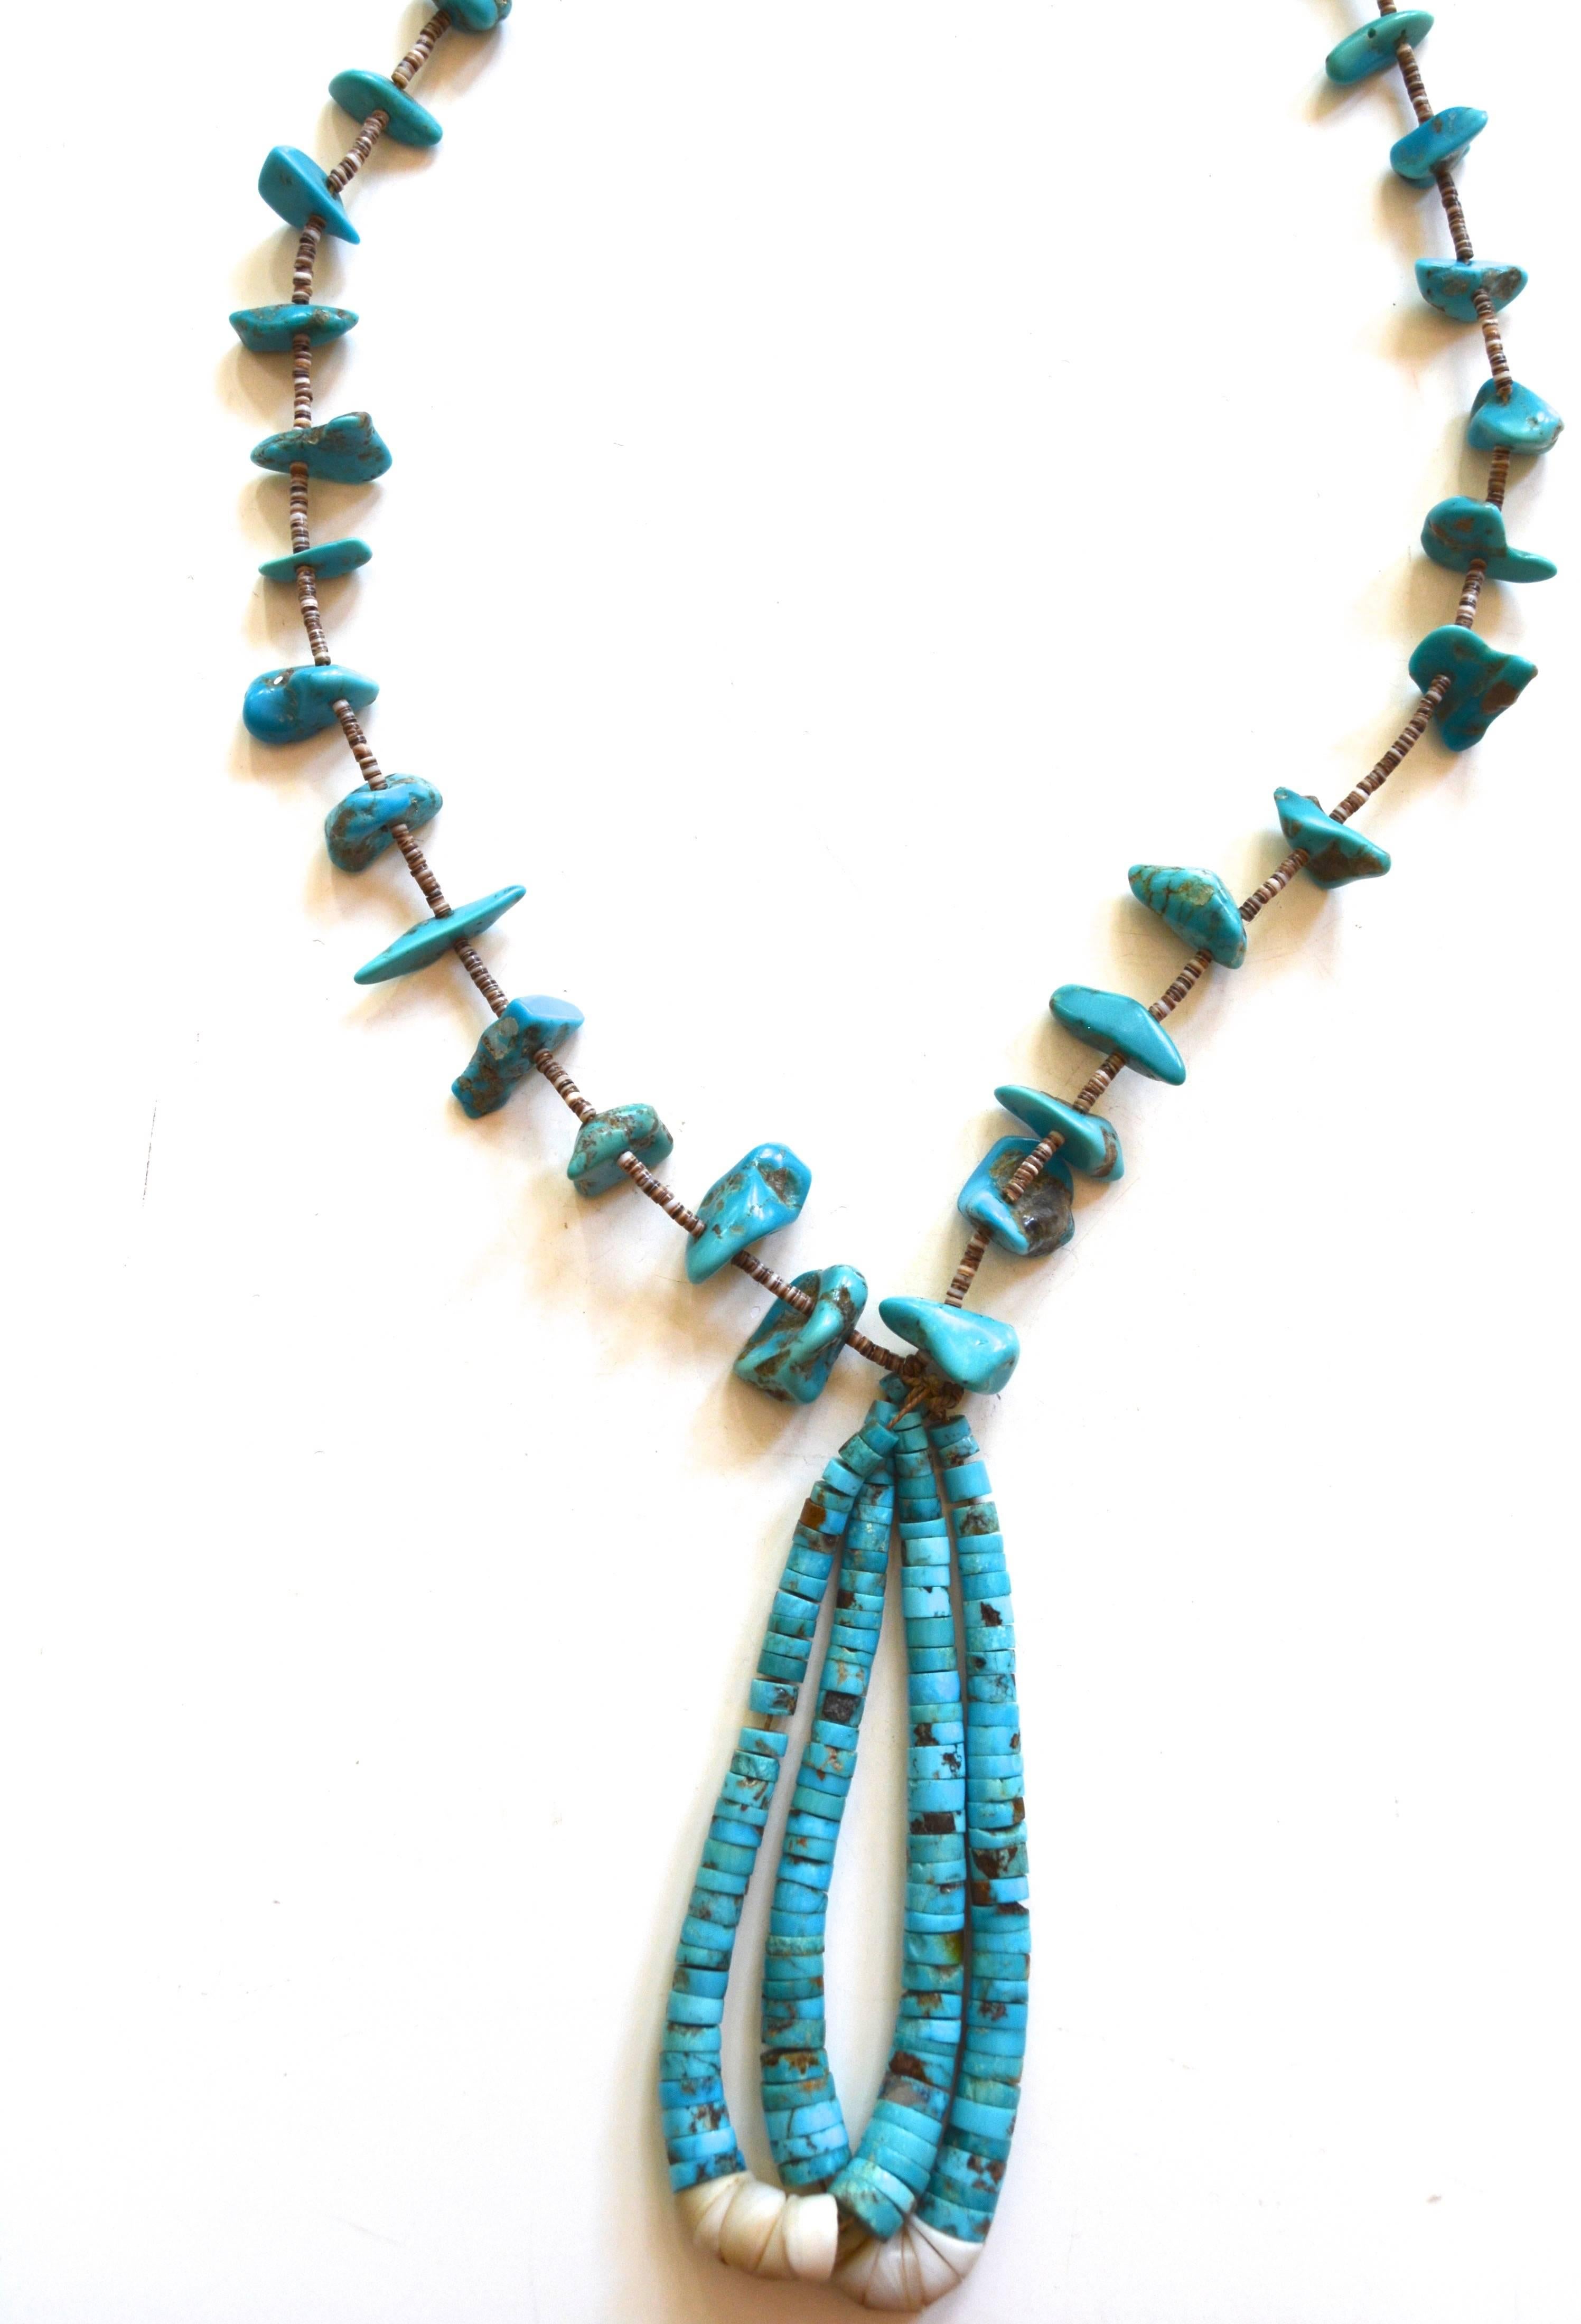 Santa Domingo Pueblo Necklace In Excellent Condition For Sale In Litchfield County, CT